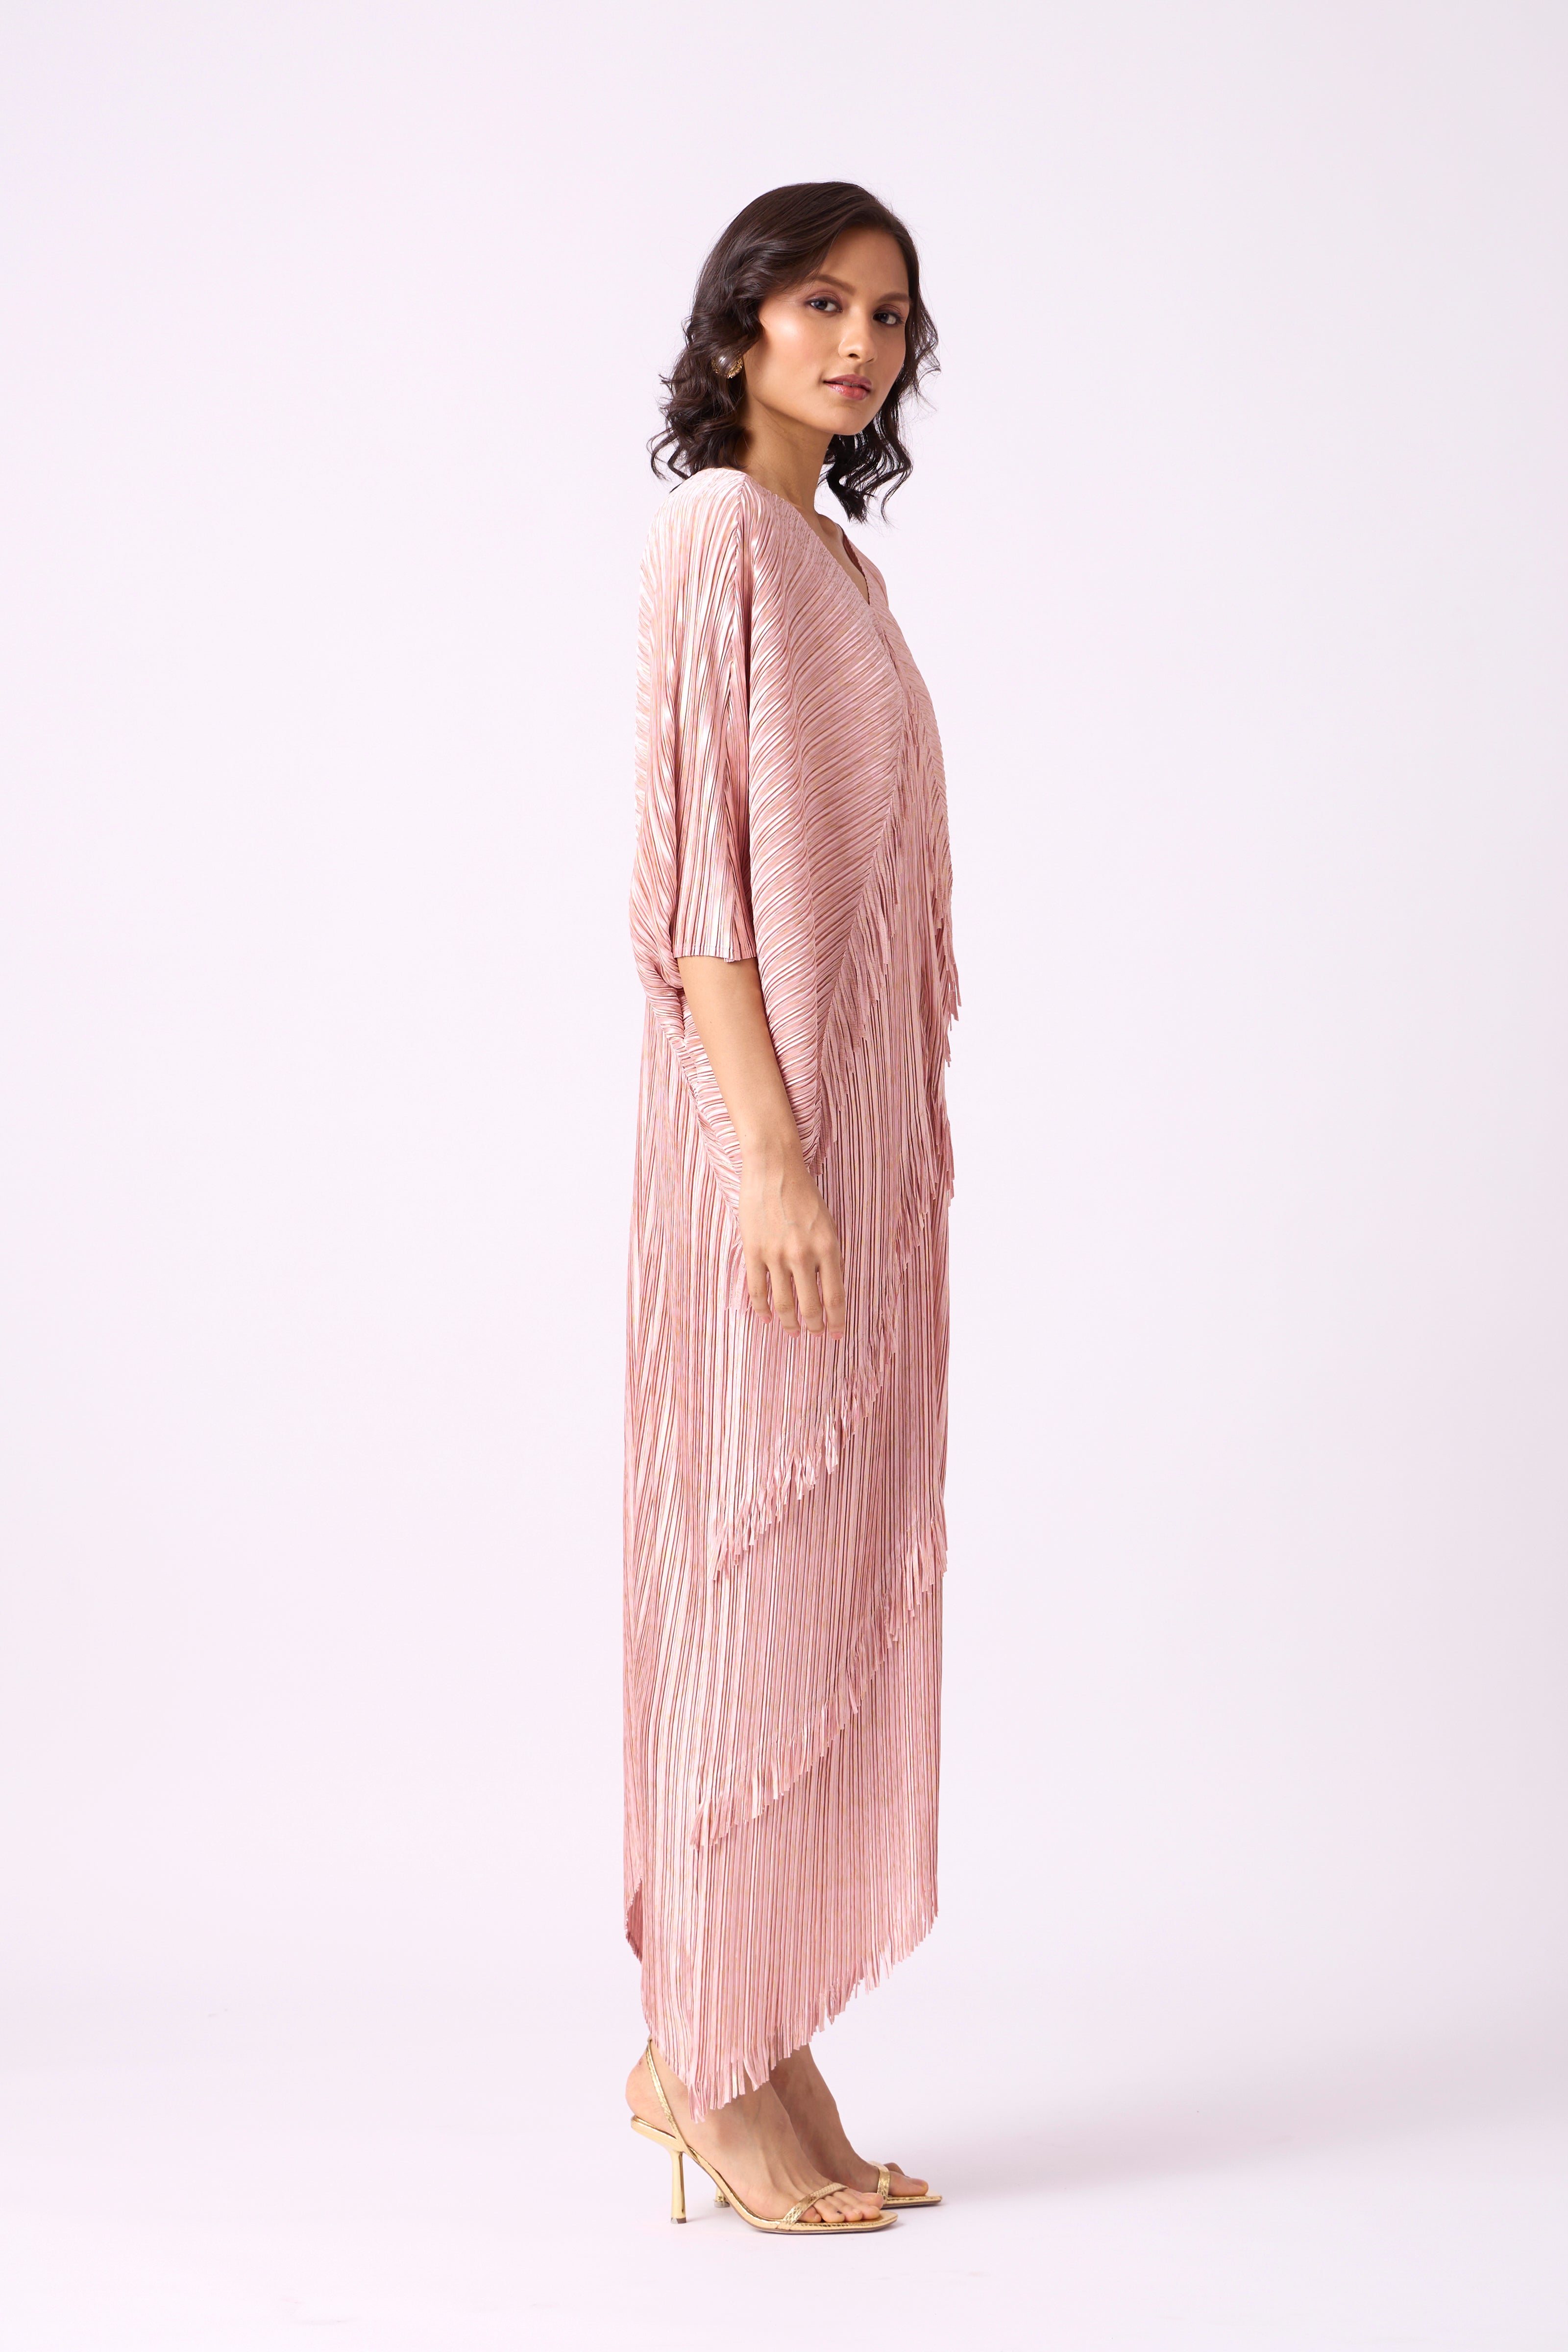 Kimono Fringe Dress - Metallic Pink